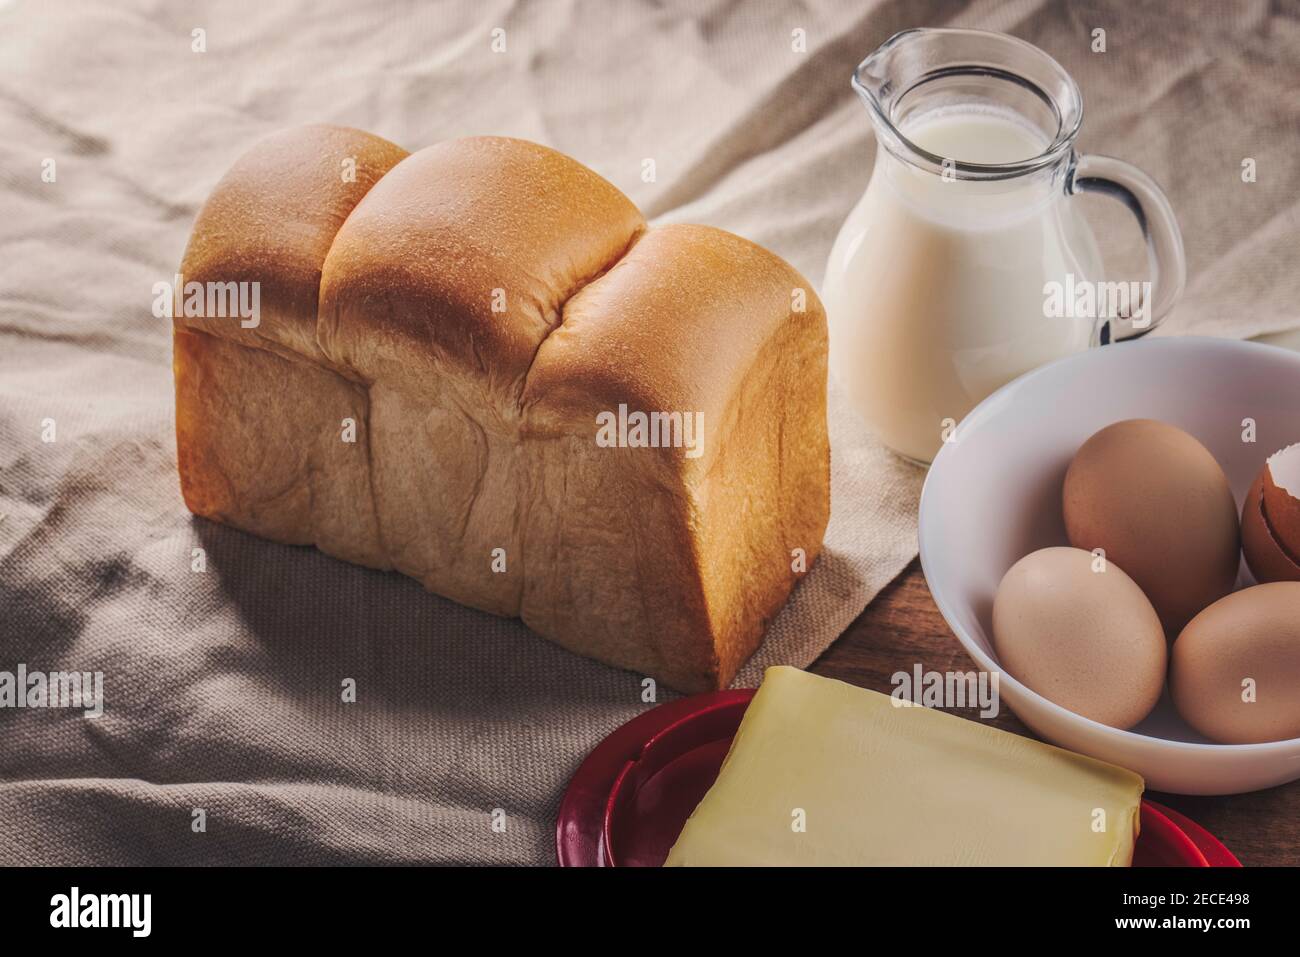 Japanese homemade bread Stock Photo